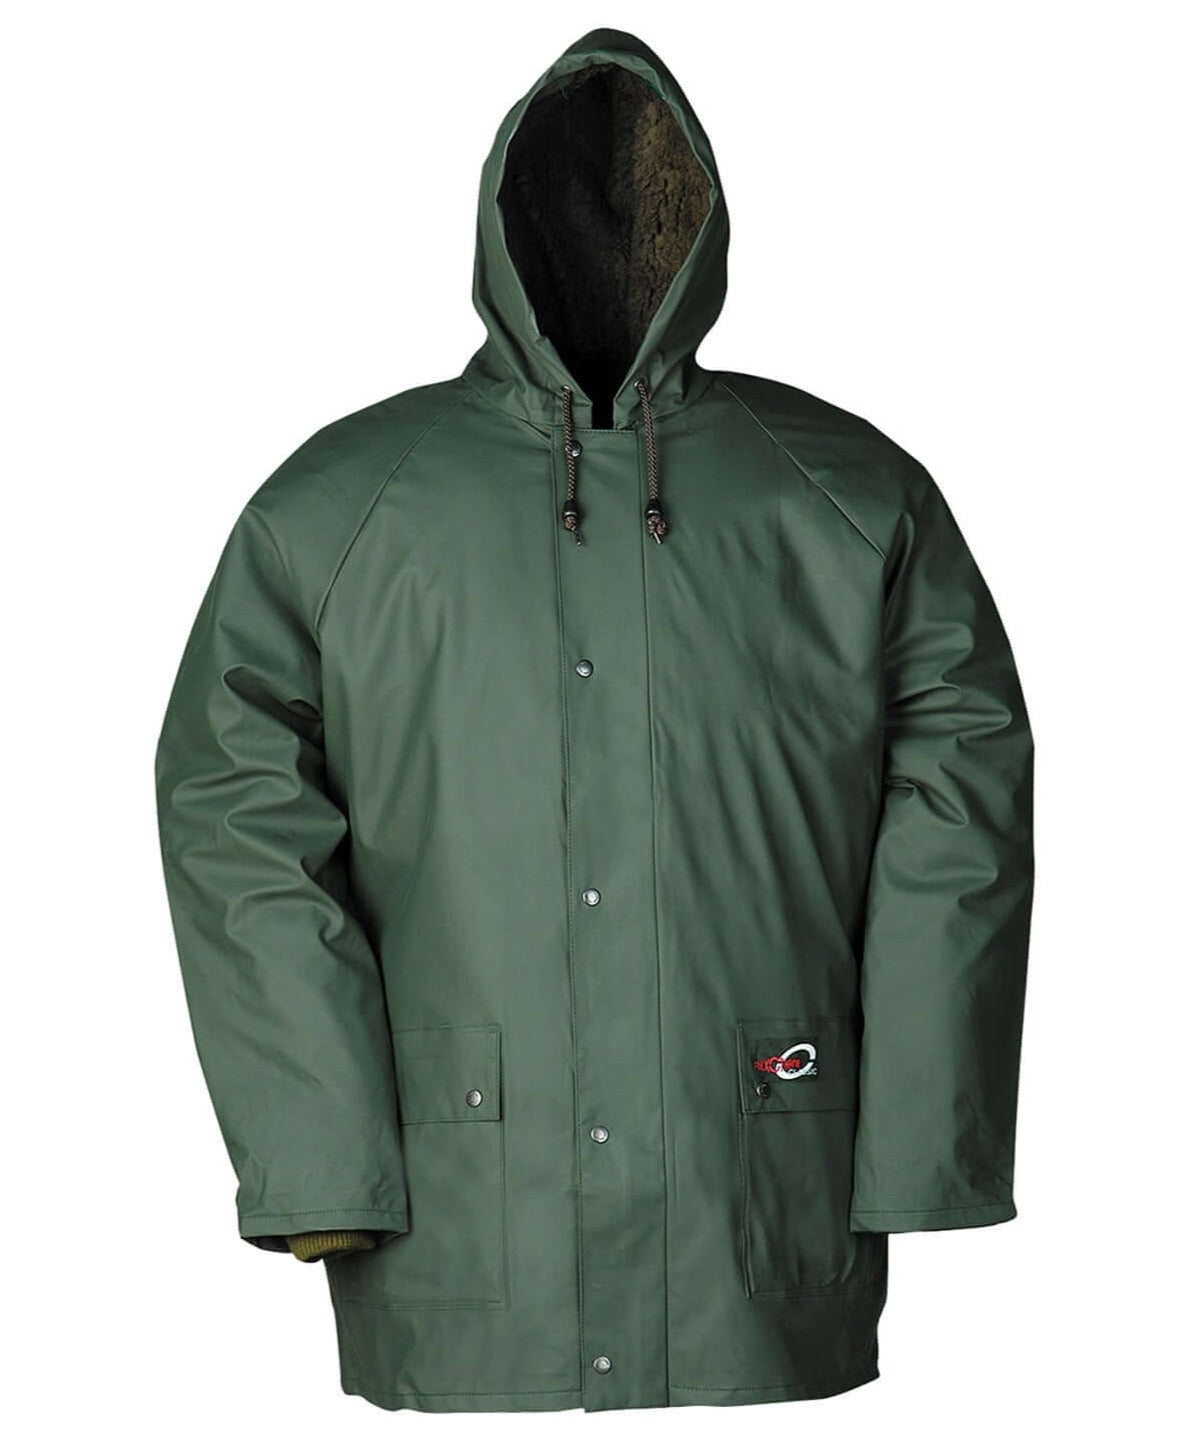 Flexothane Essential Dover Jacket in Olive Green Fleece lined waterproof.